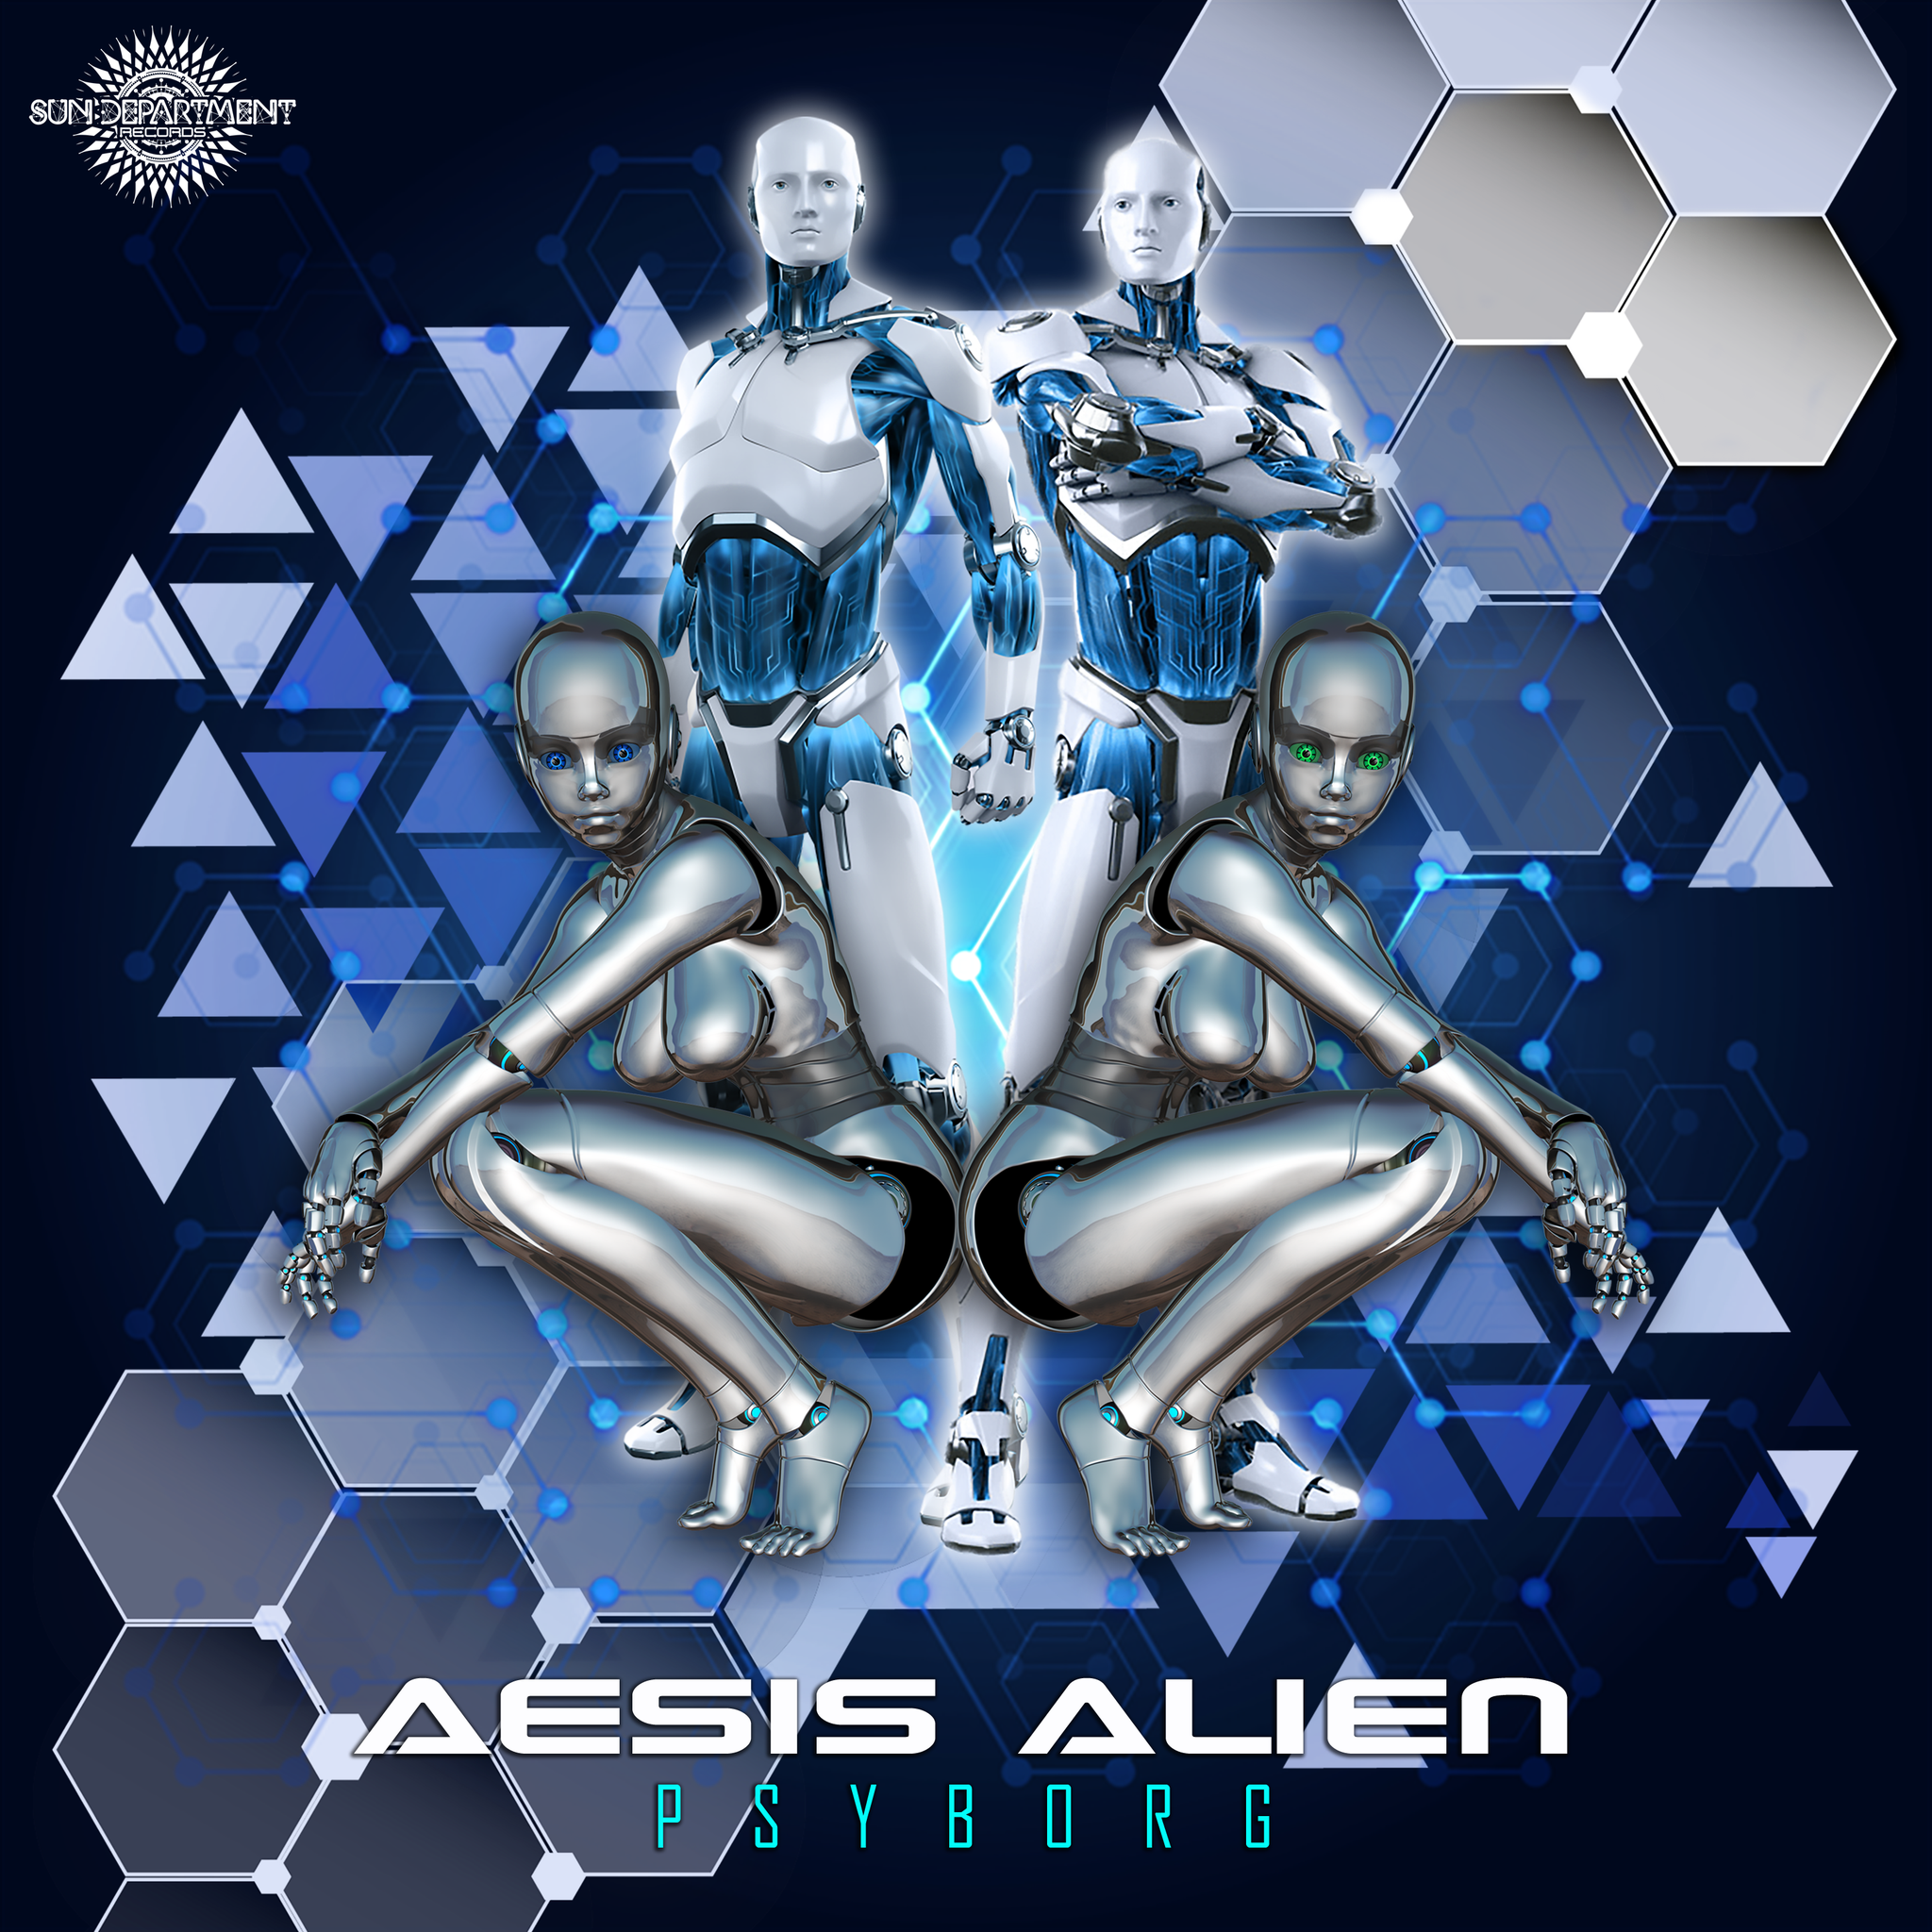 Aesis Alien - Psyborg